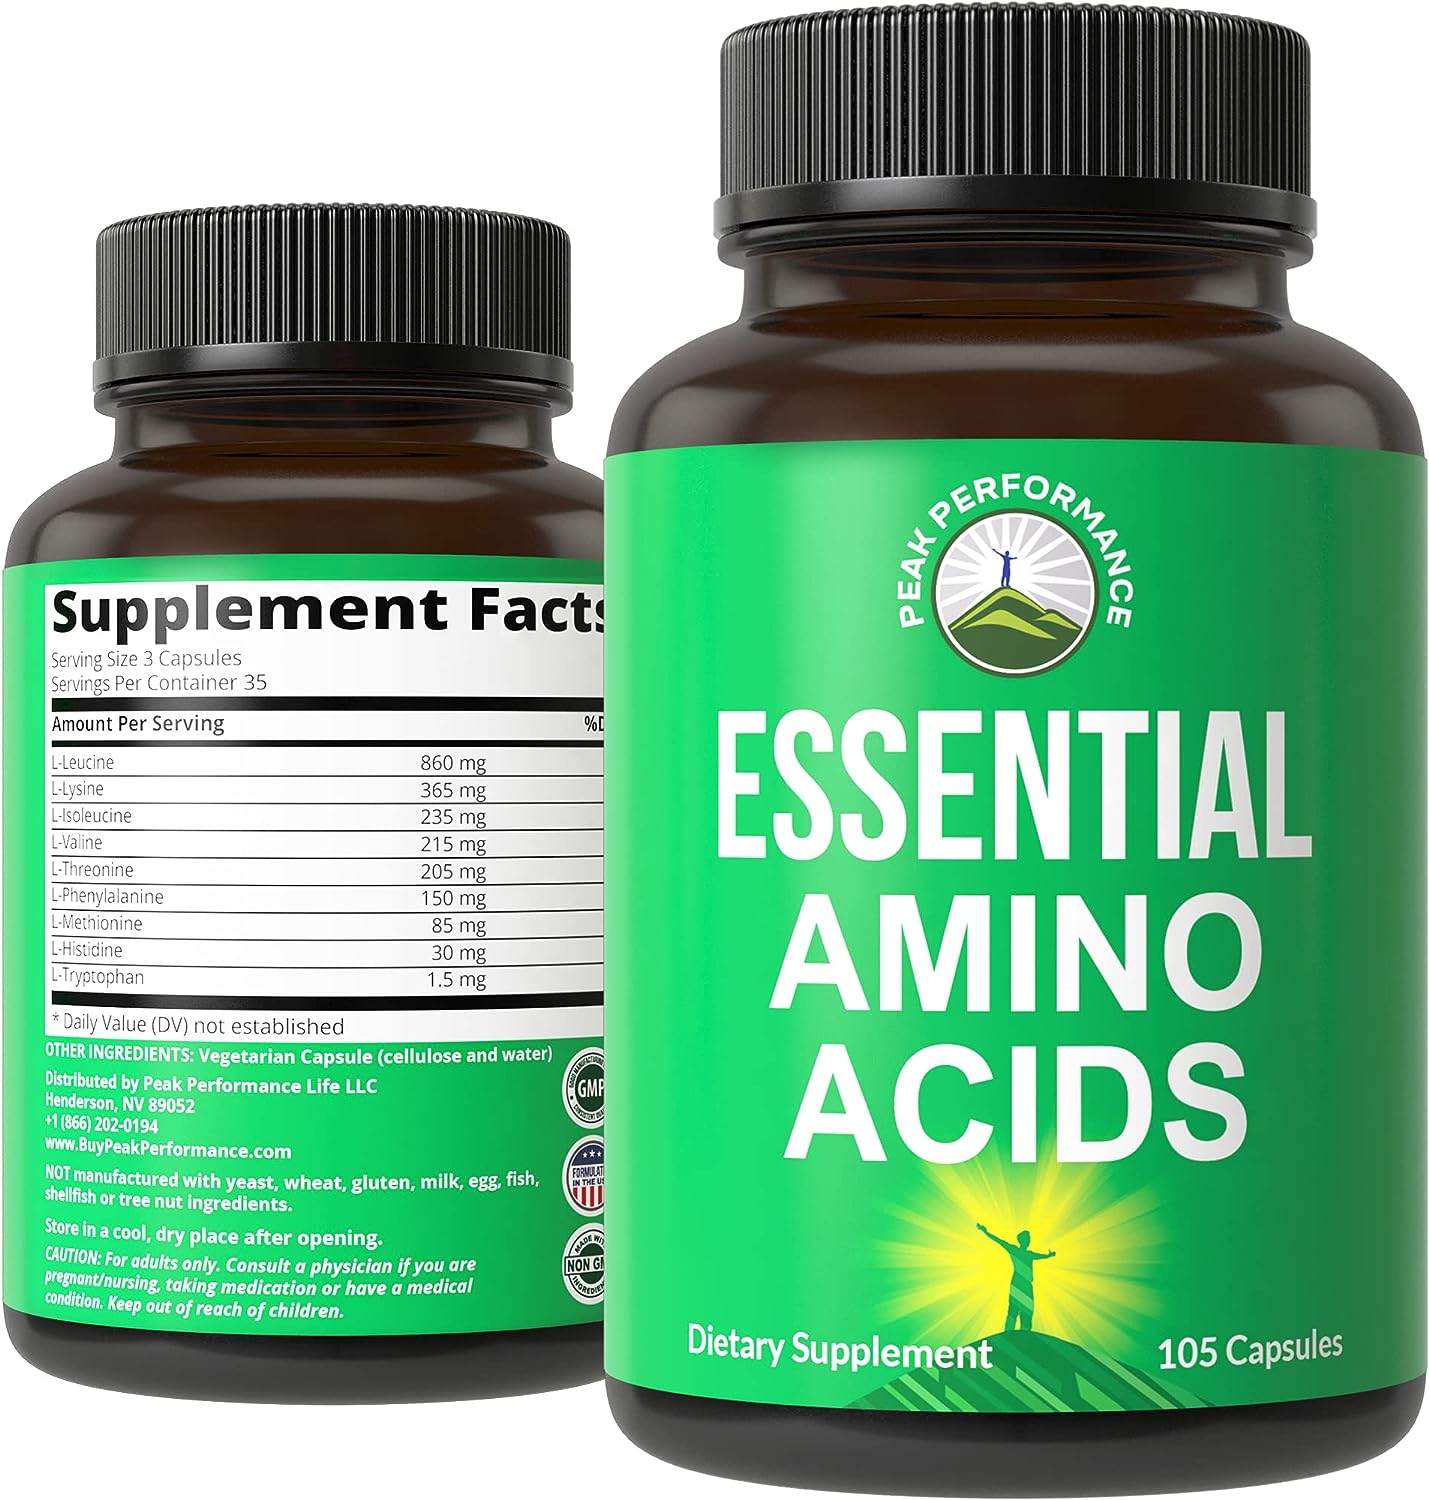 All 9 Essential Amino Acids Supplement. Capsules With [...]